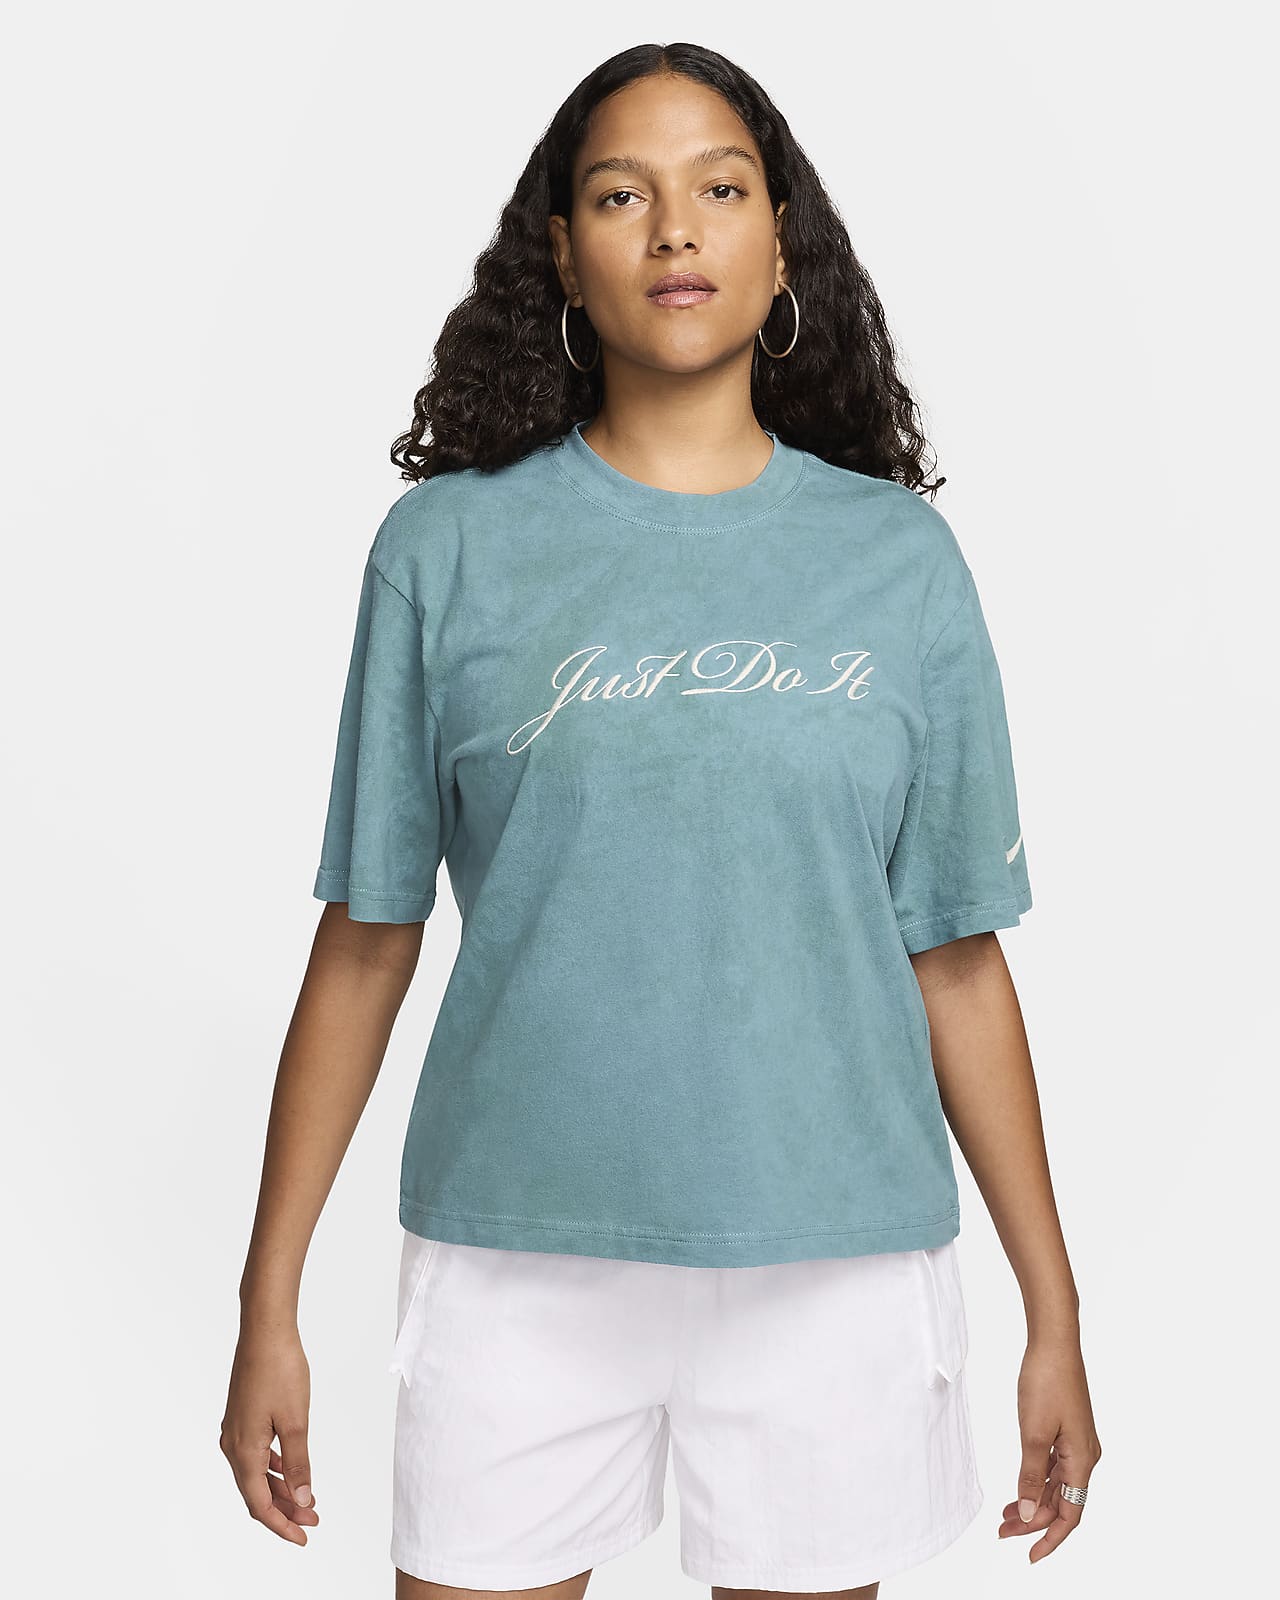 Nike Sportswear-T-shirt til kvinder